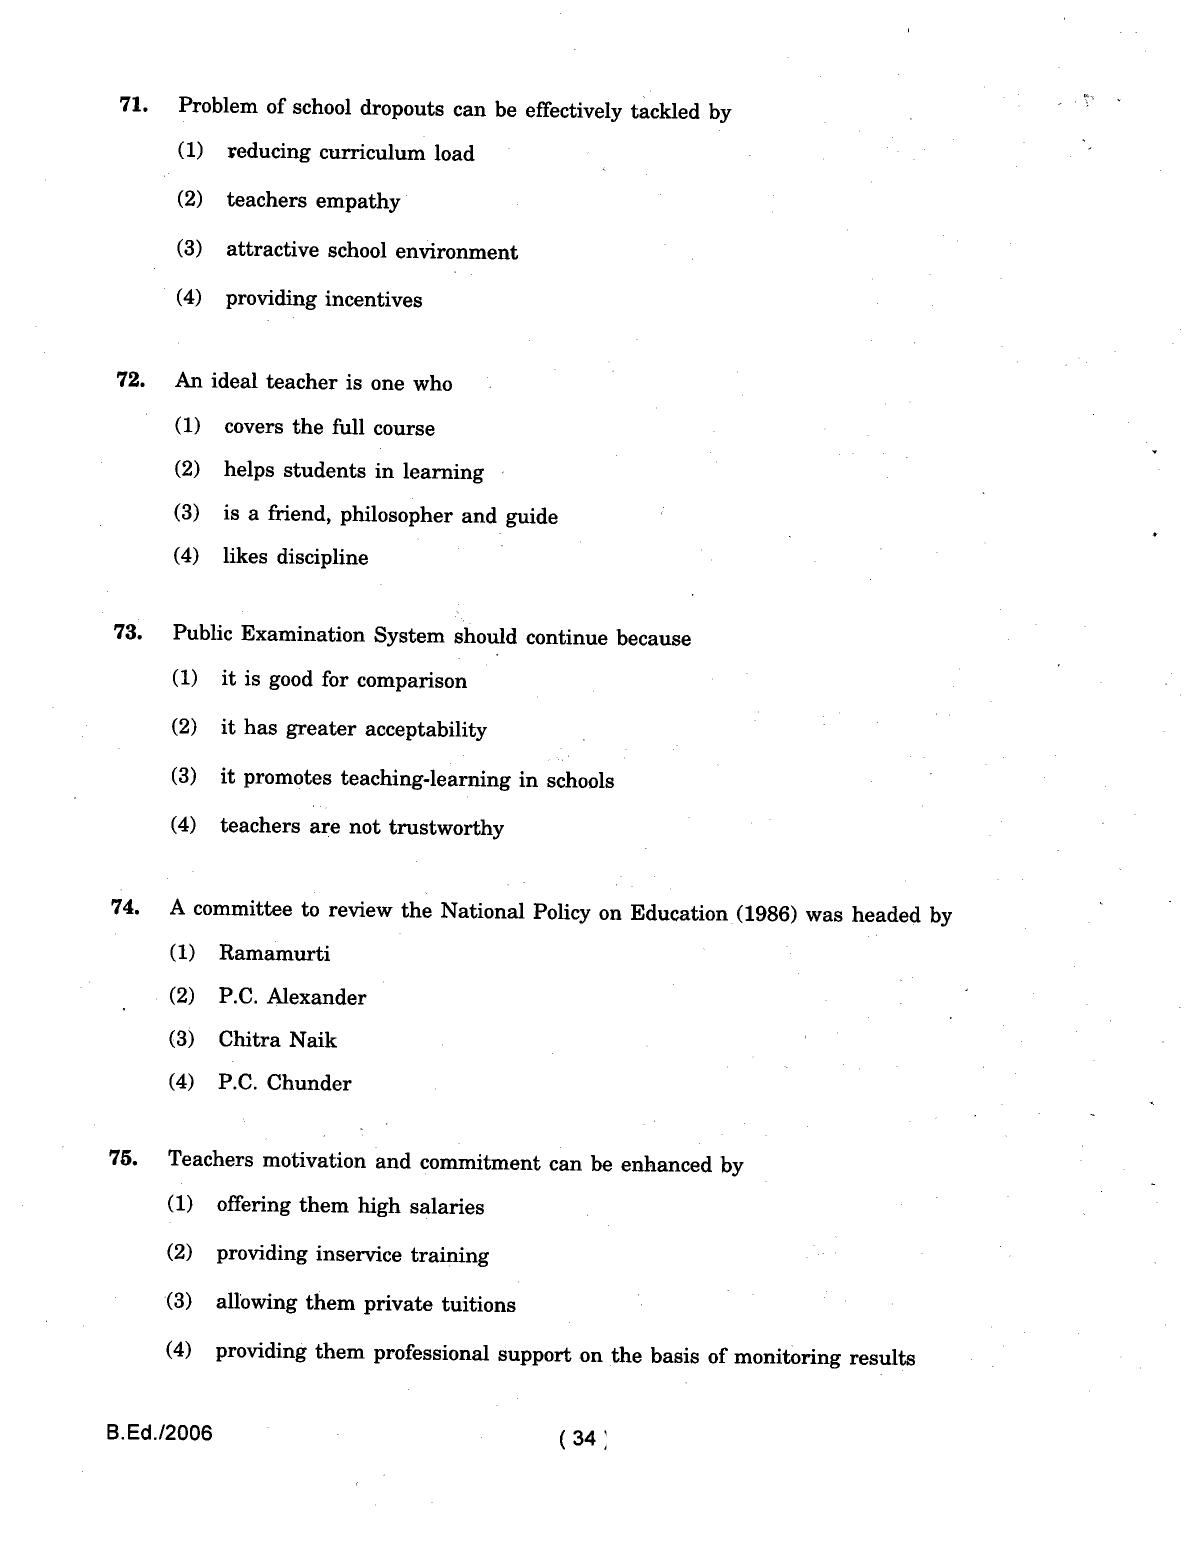 IGNOU B.Ed 2006 Question Paper - Page 34